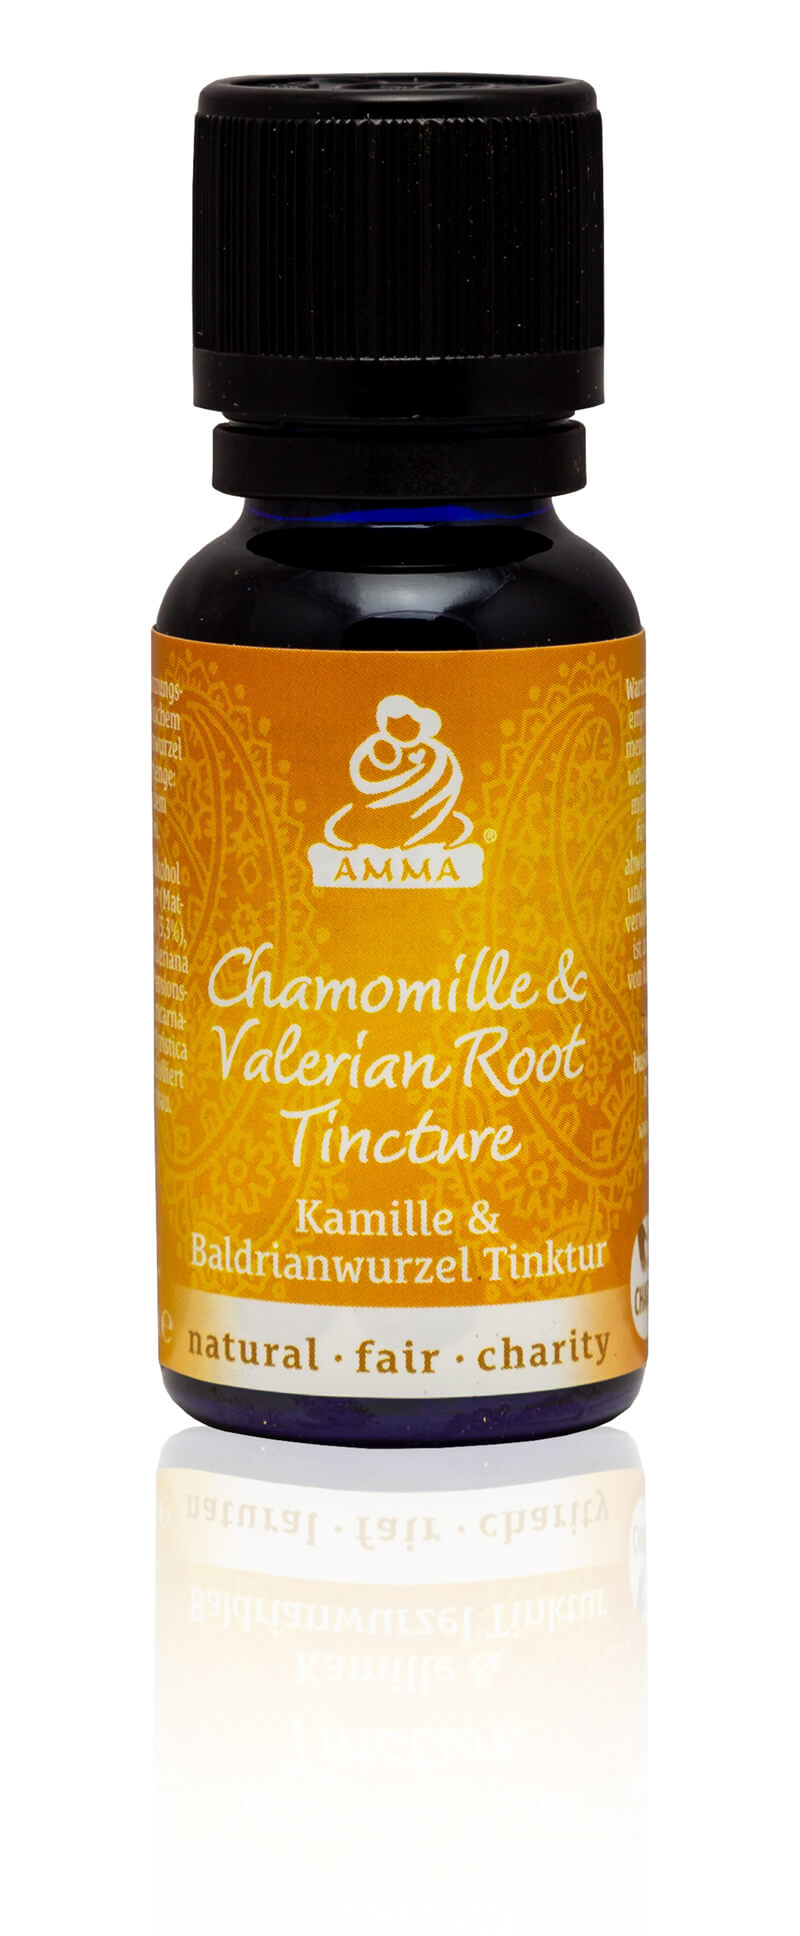 Chamomile & Valerian Root Tincture, organic